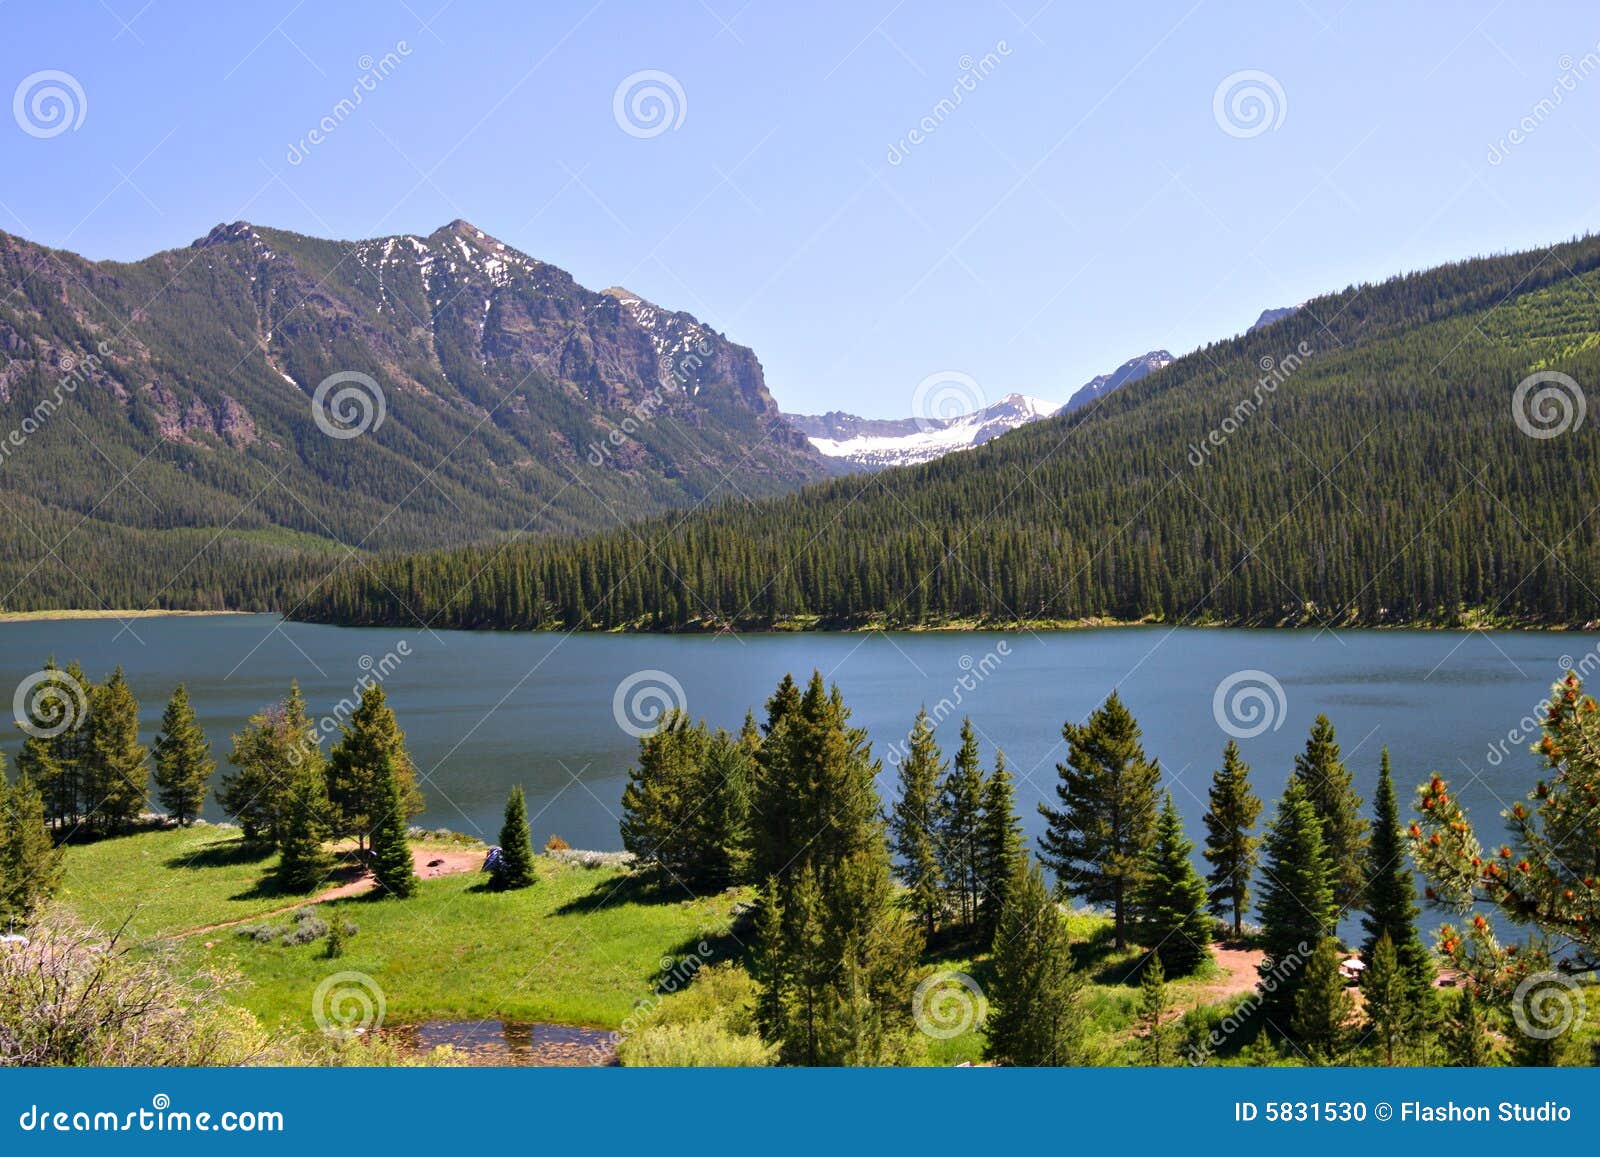 highlite lake at gallatin national forest, bozeman